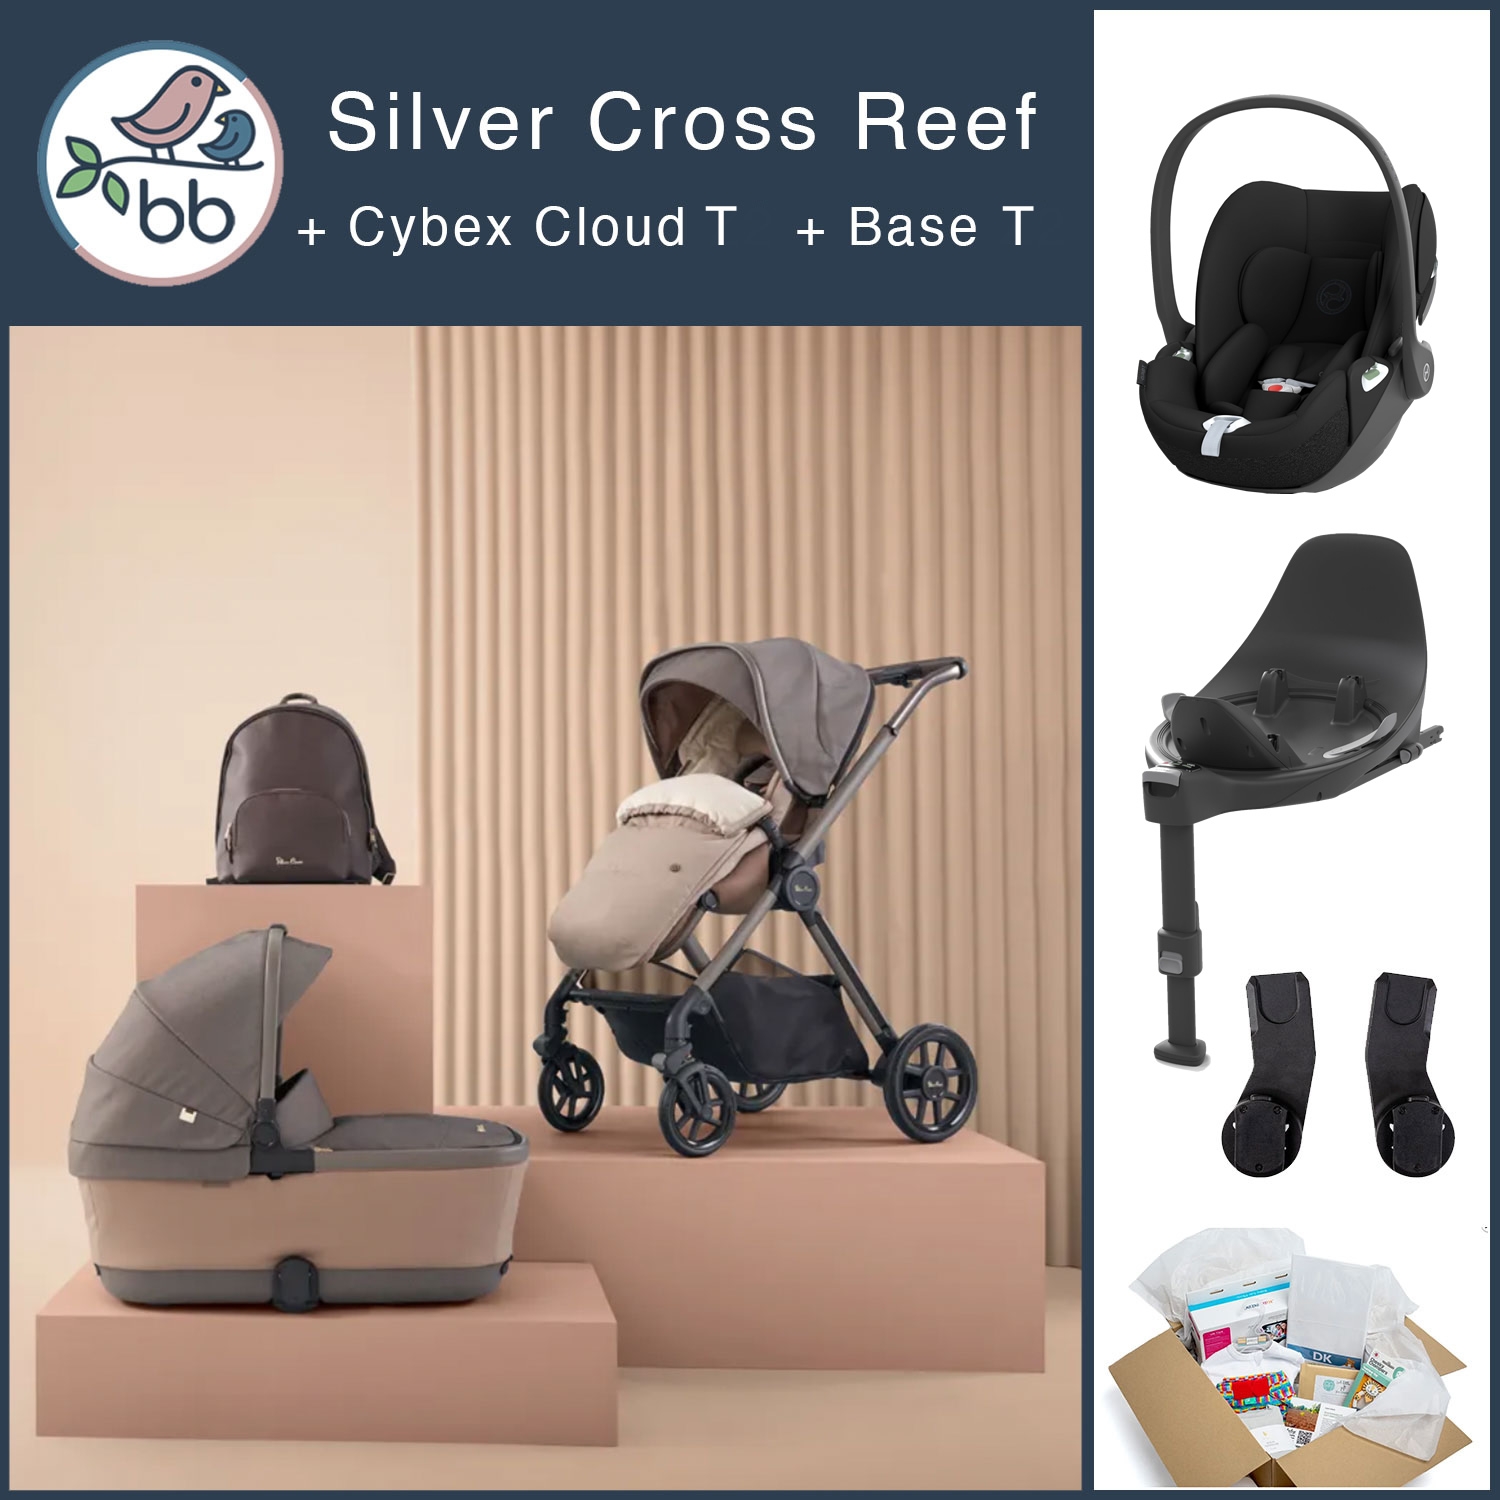 Silver Cross Reef + Cybex Cloud T Travel System